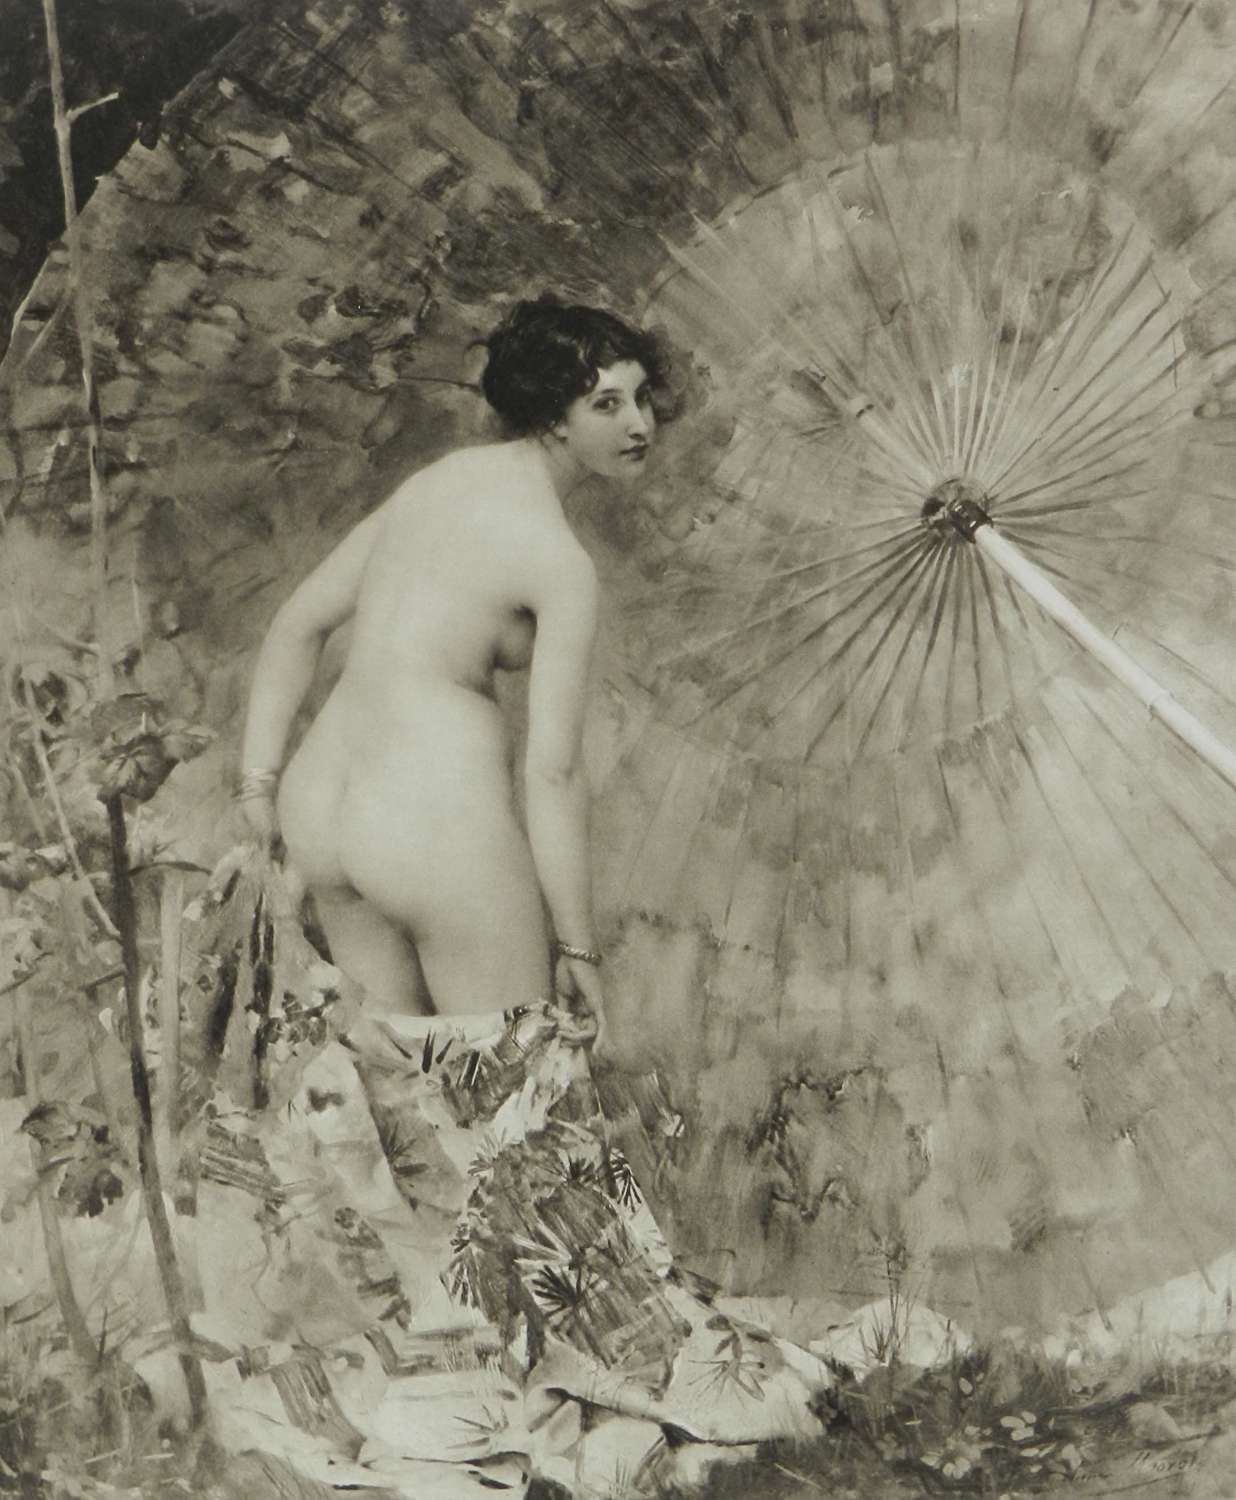 Etude de Femme Bain Nude Signed Aime Morot Engraving c1906 no 309 of 500